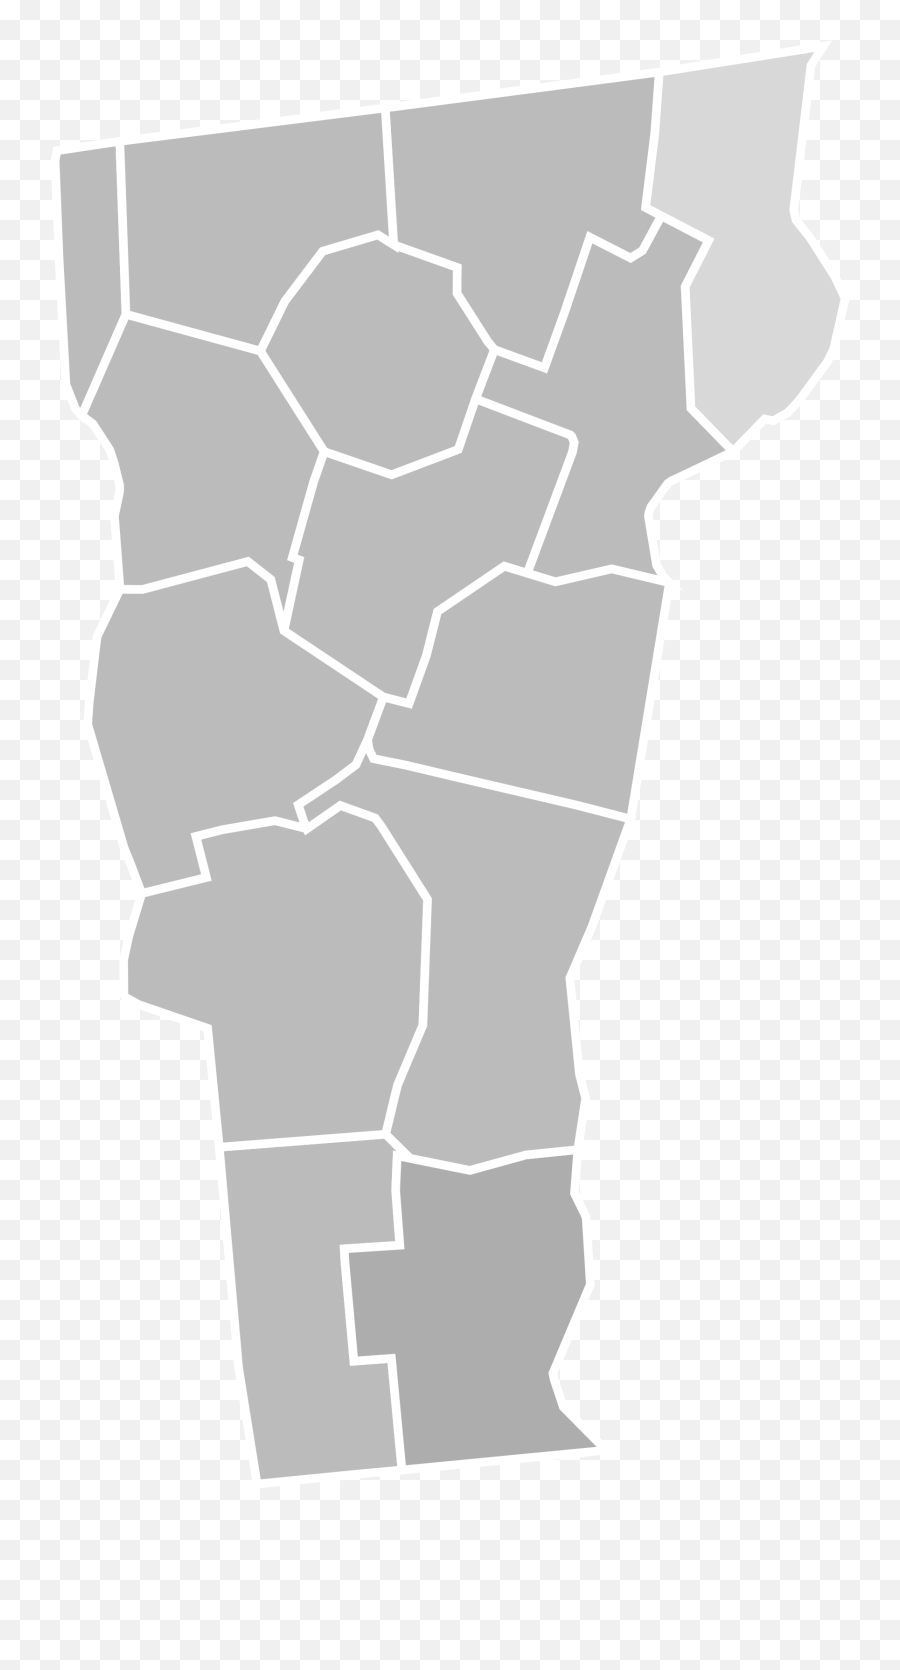 2006 United States Senate Election In - 2016 Vermont Election Results Emoji,Dank Meme Emoji